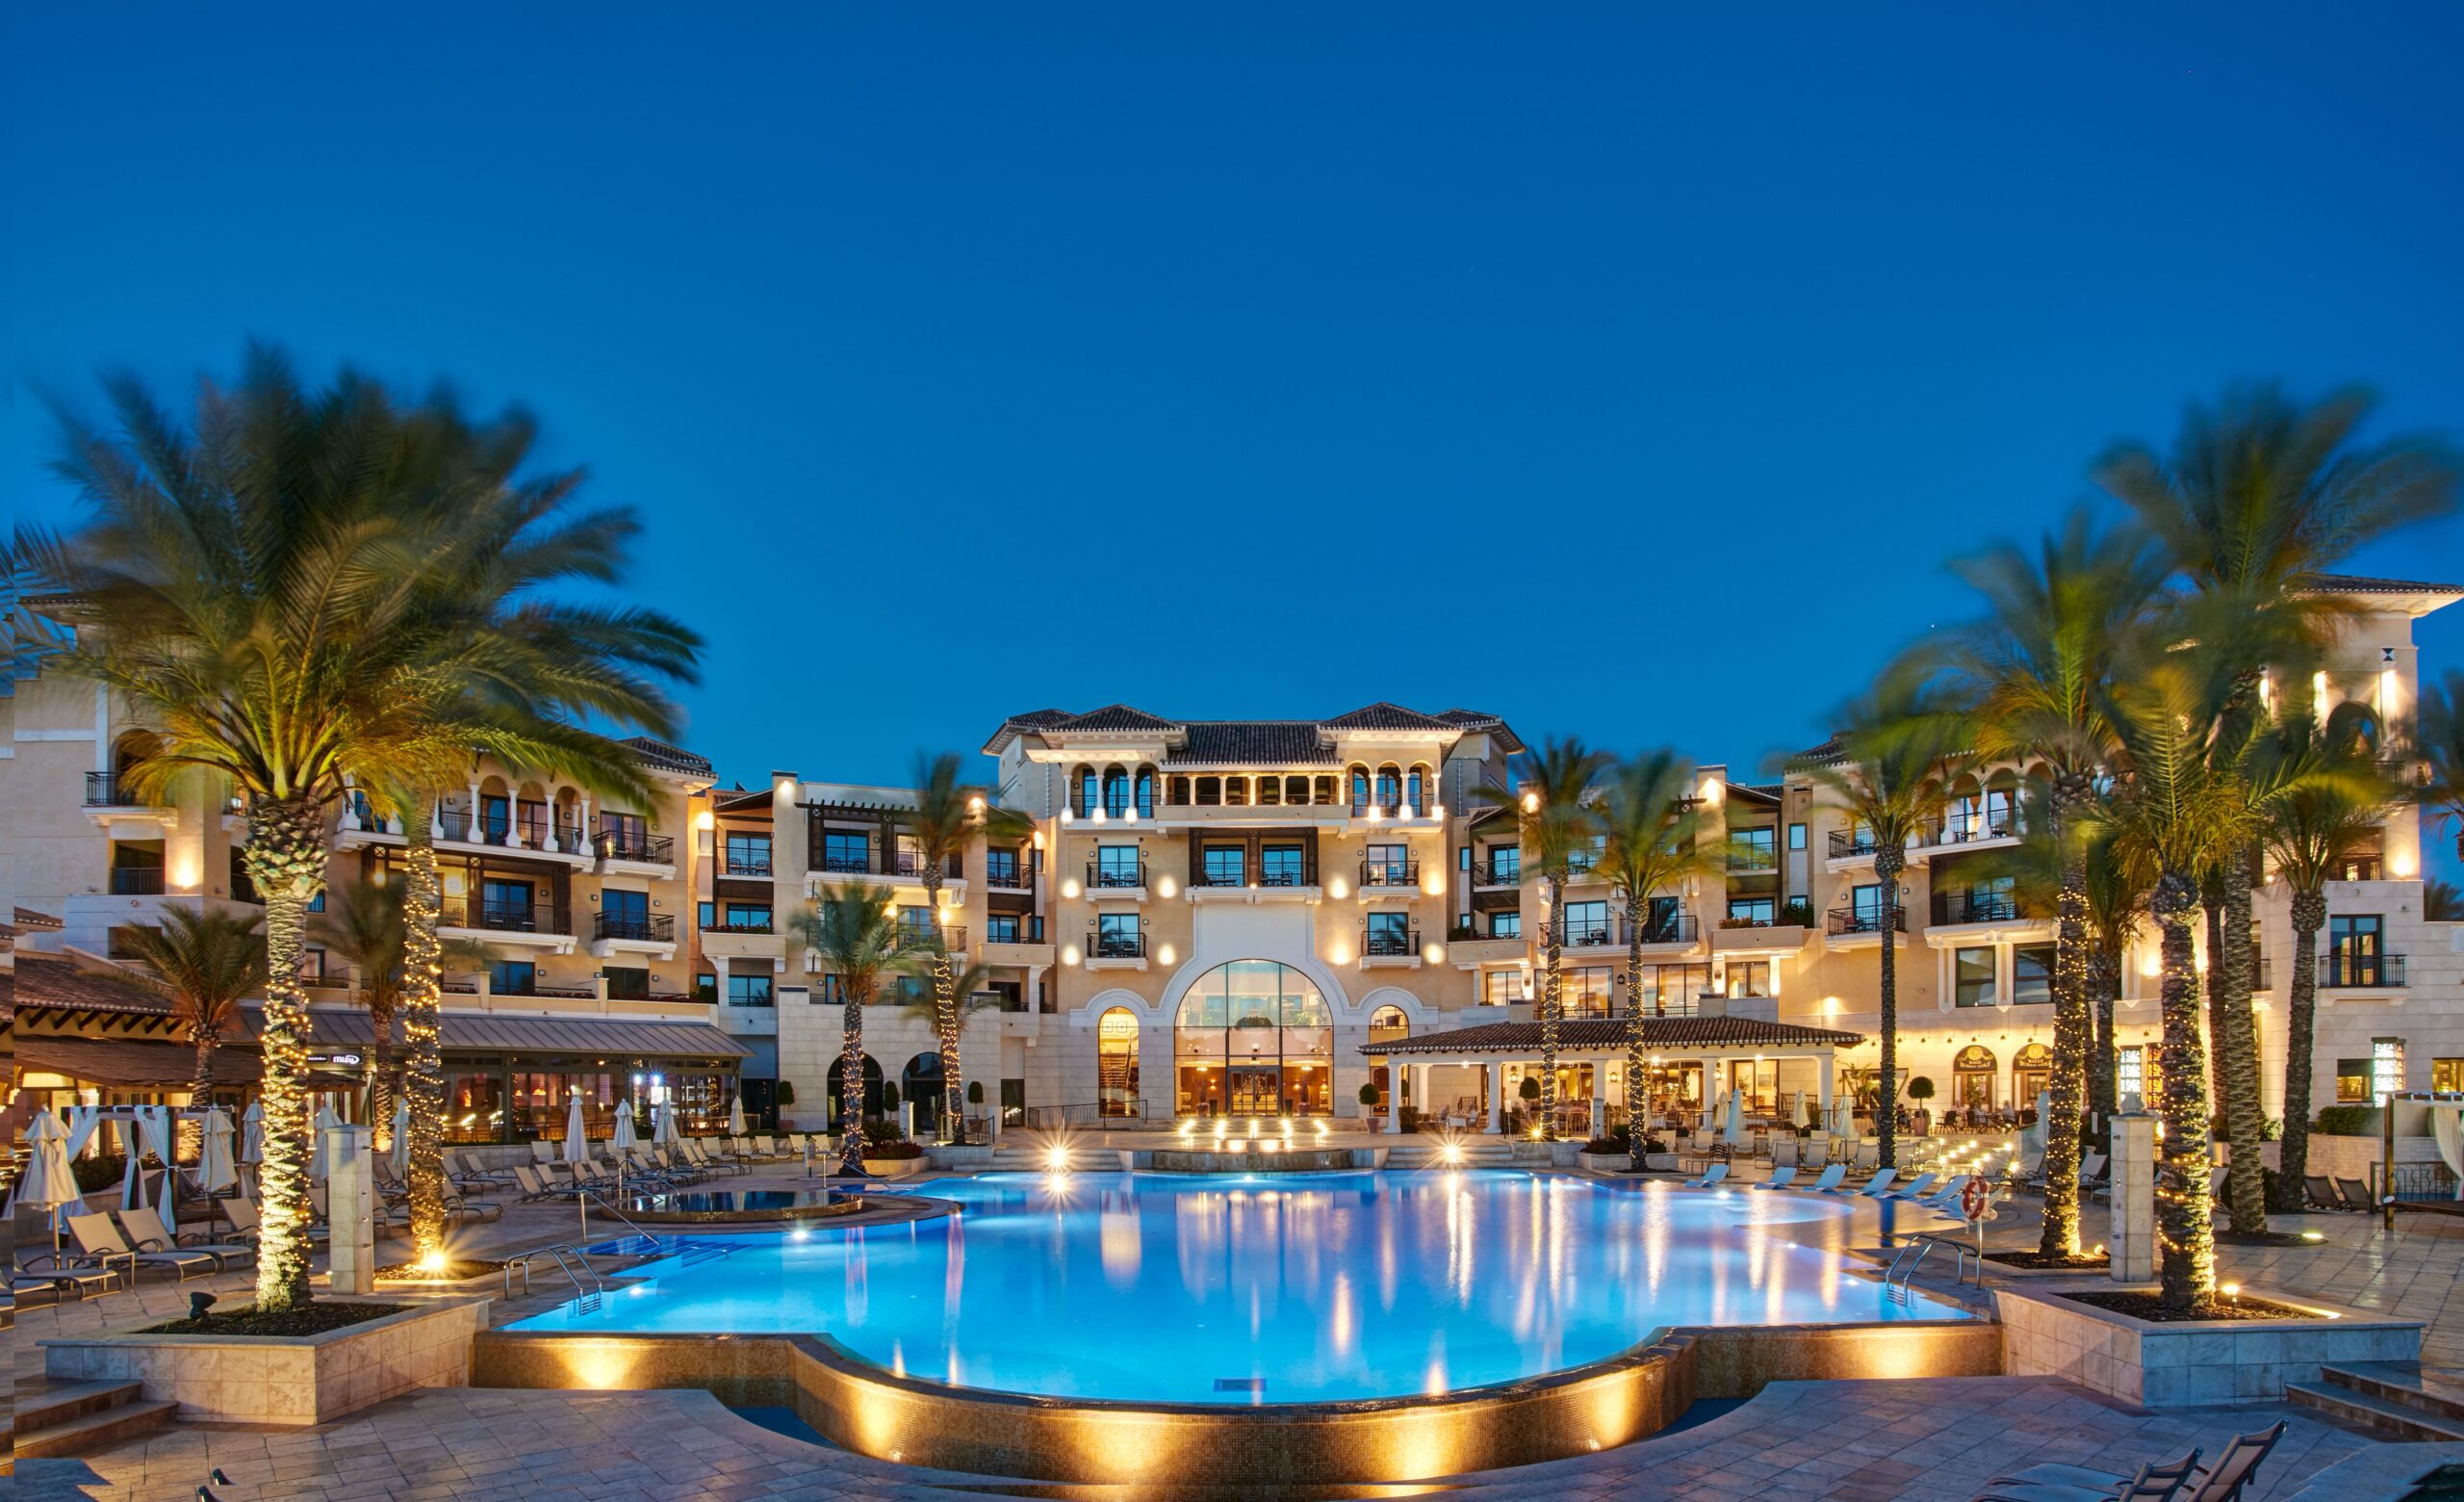 View of the main pool & hotel at Mar Menor Golf & Spa Resort in Murcia